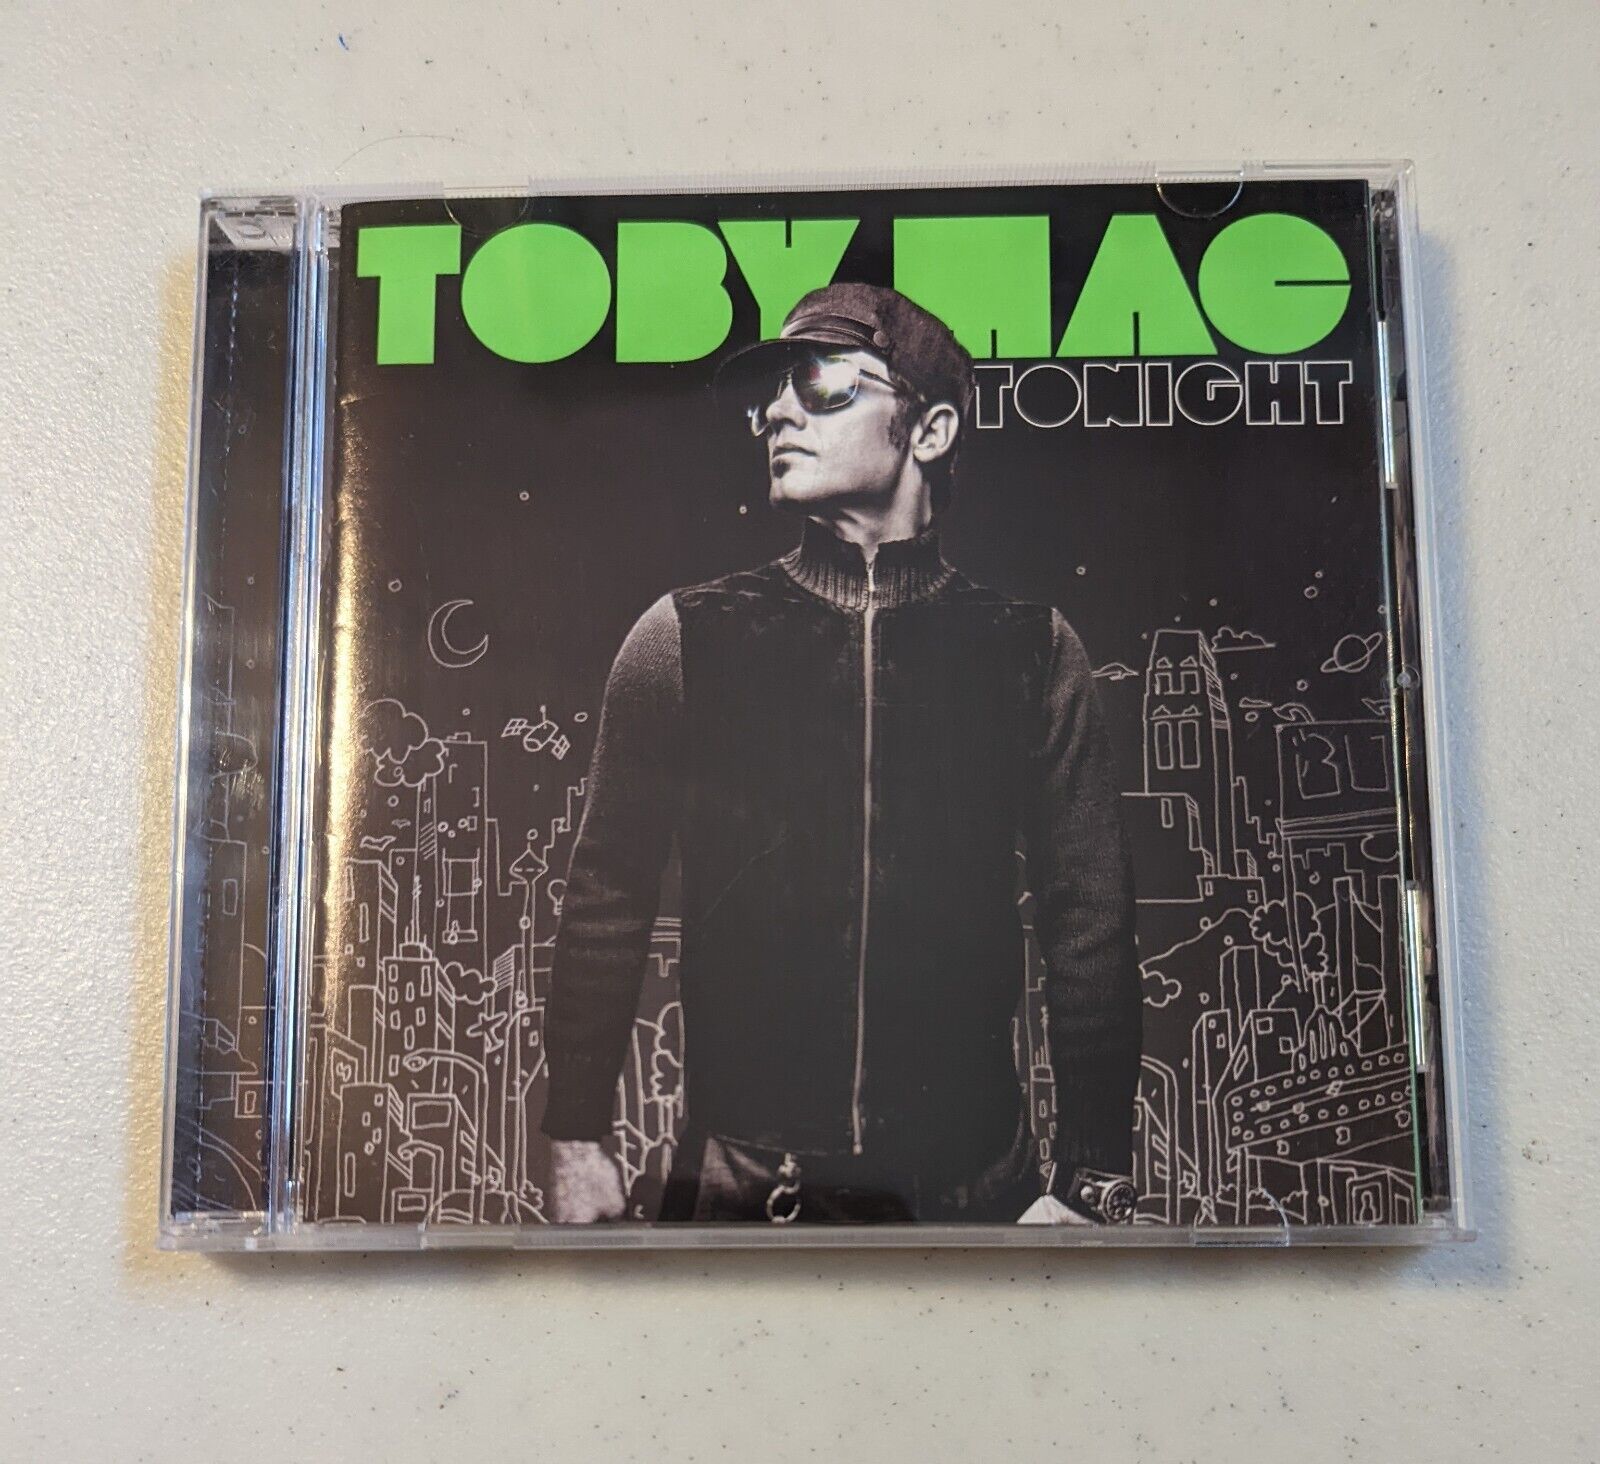 Toby Mac - Tonight CD